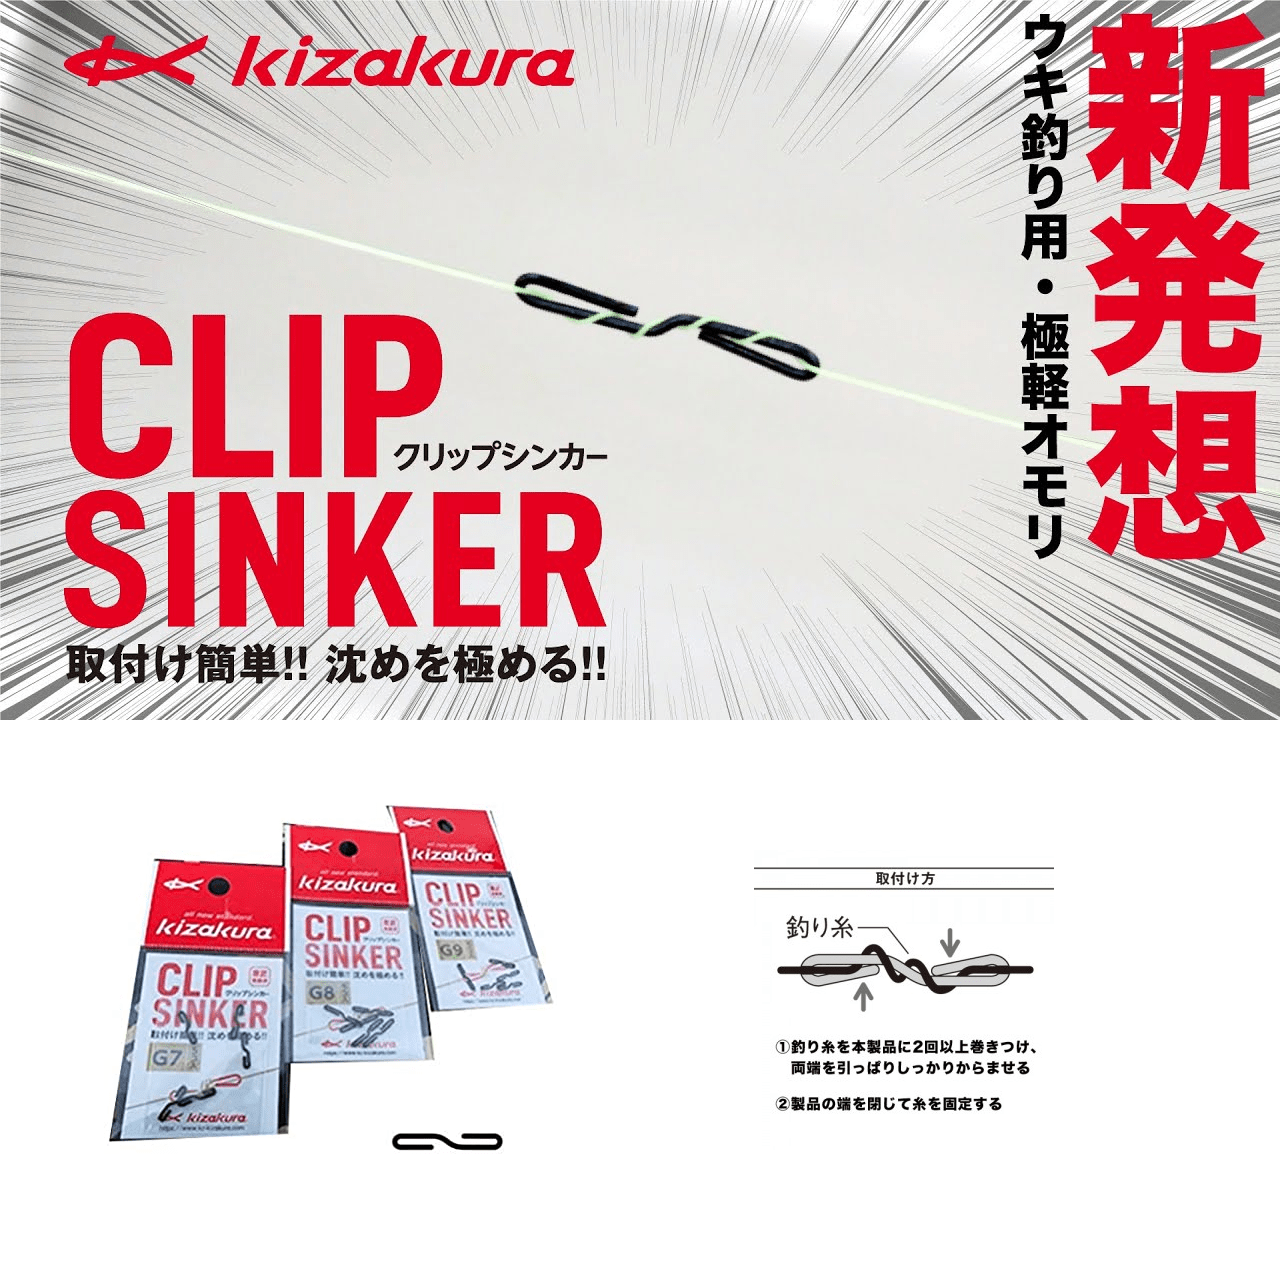 Kizakura Clip Sinker - Coastal Fishing Tackle